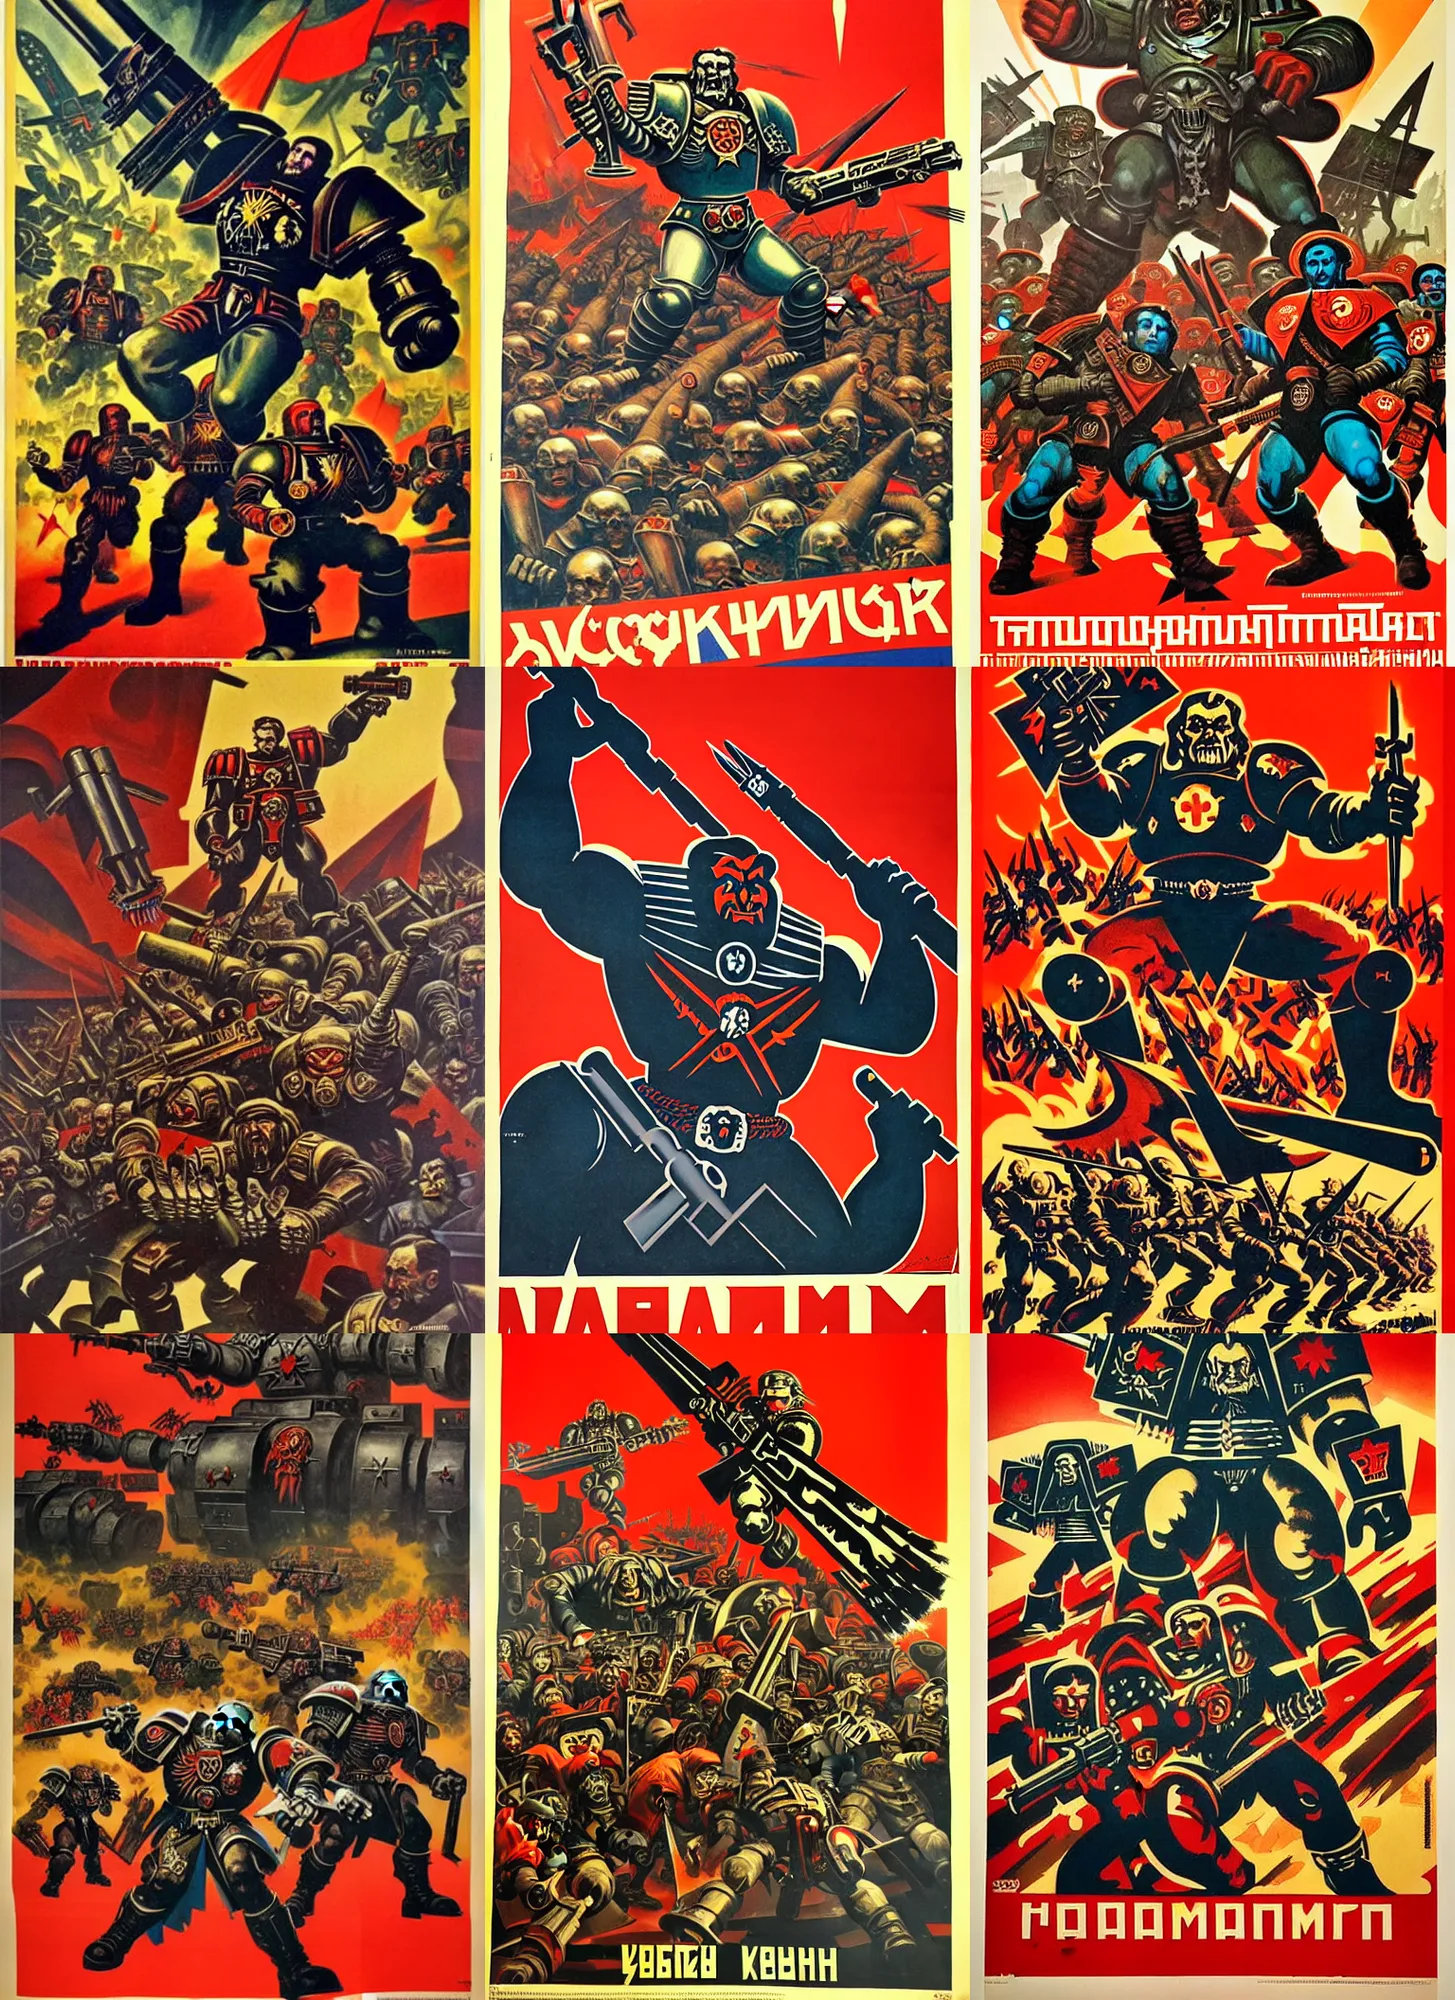 Prompt: soviet propaganda poster of chaos from warrhammer 4 0, 0 0 0, warhammer 4 0 k, socialist realism. by alexander zelensky, viktor deni, havrylo pustoviyt